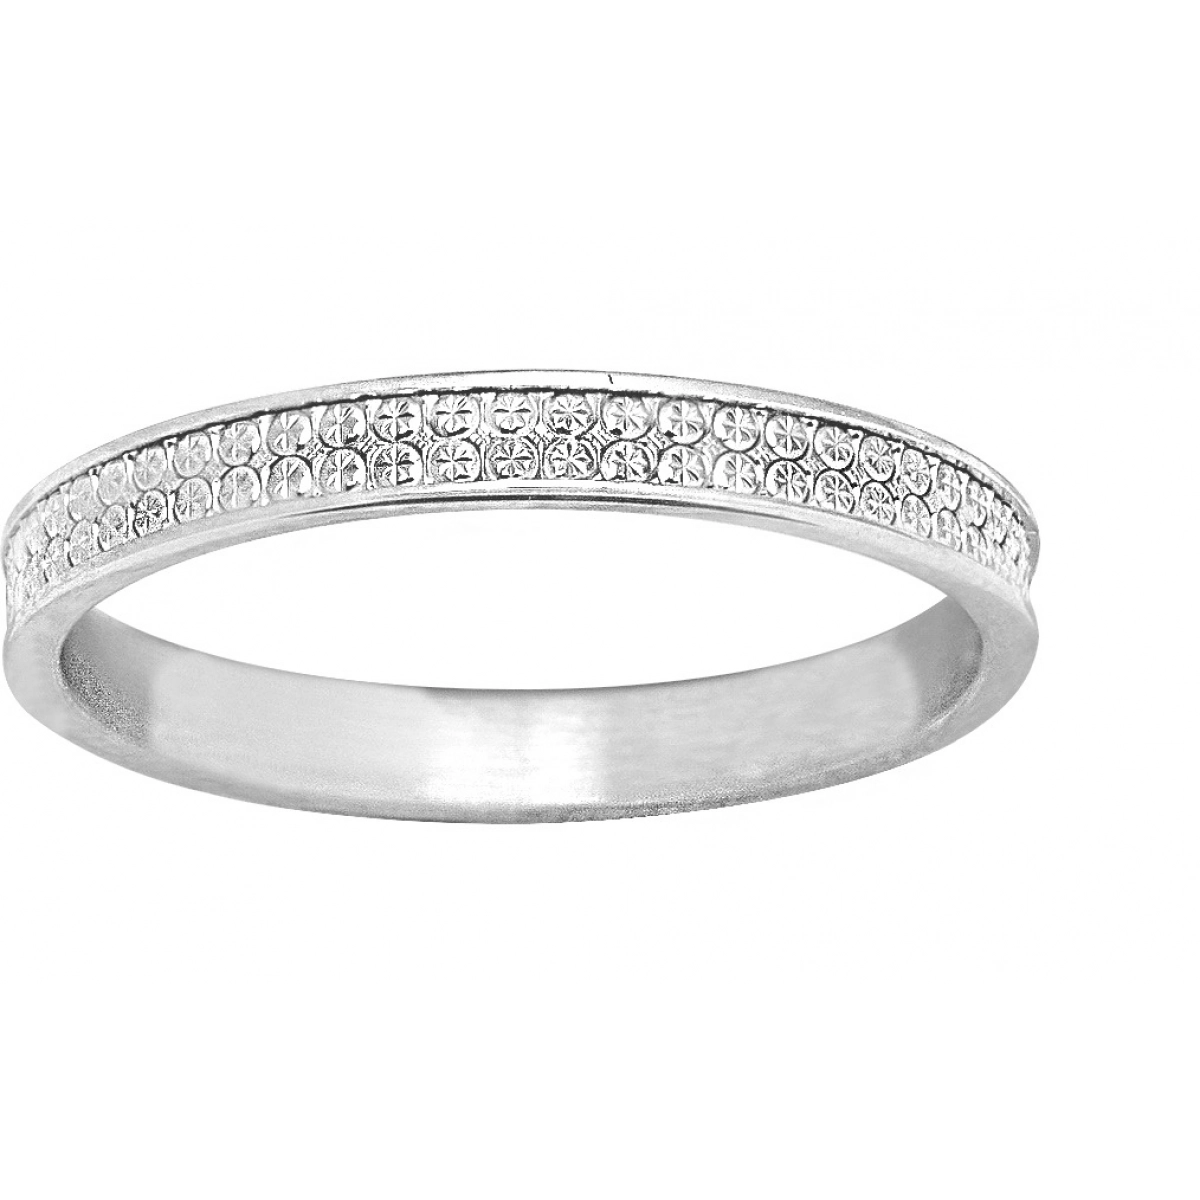 Wedding ring 925 Silver  - Size: 60  Lua Blanca  S37.00225.20